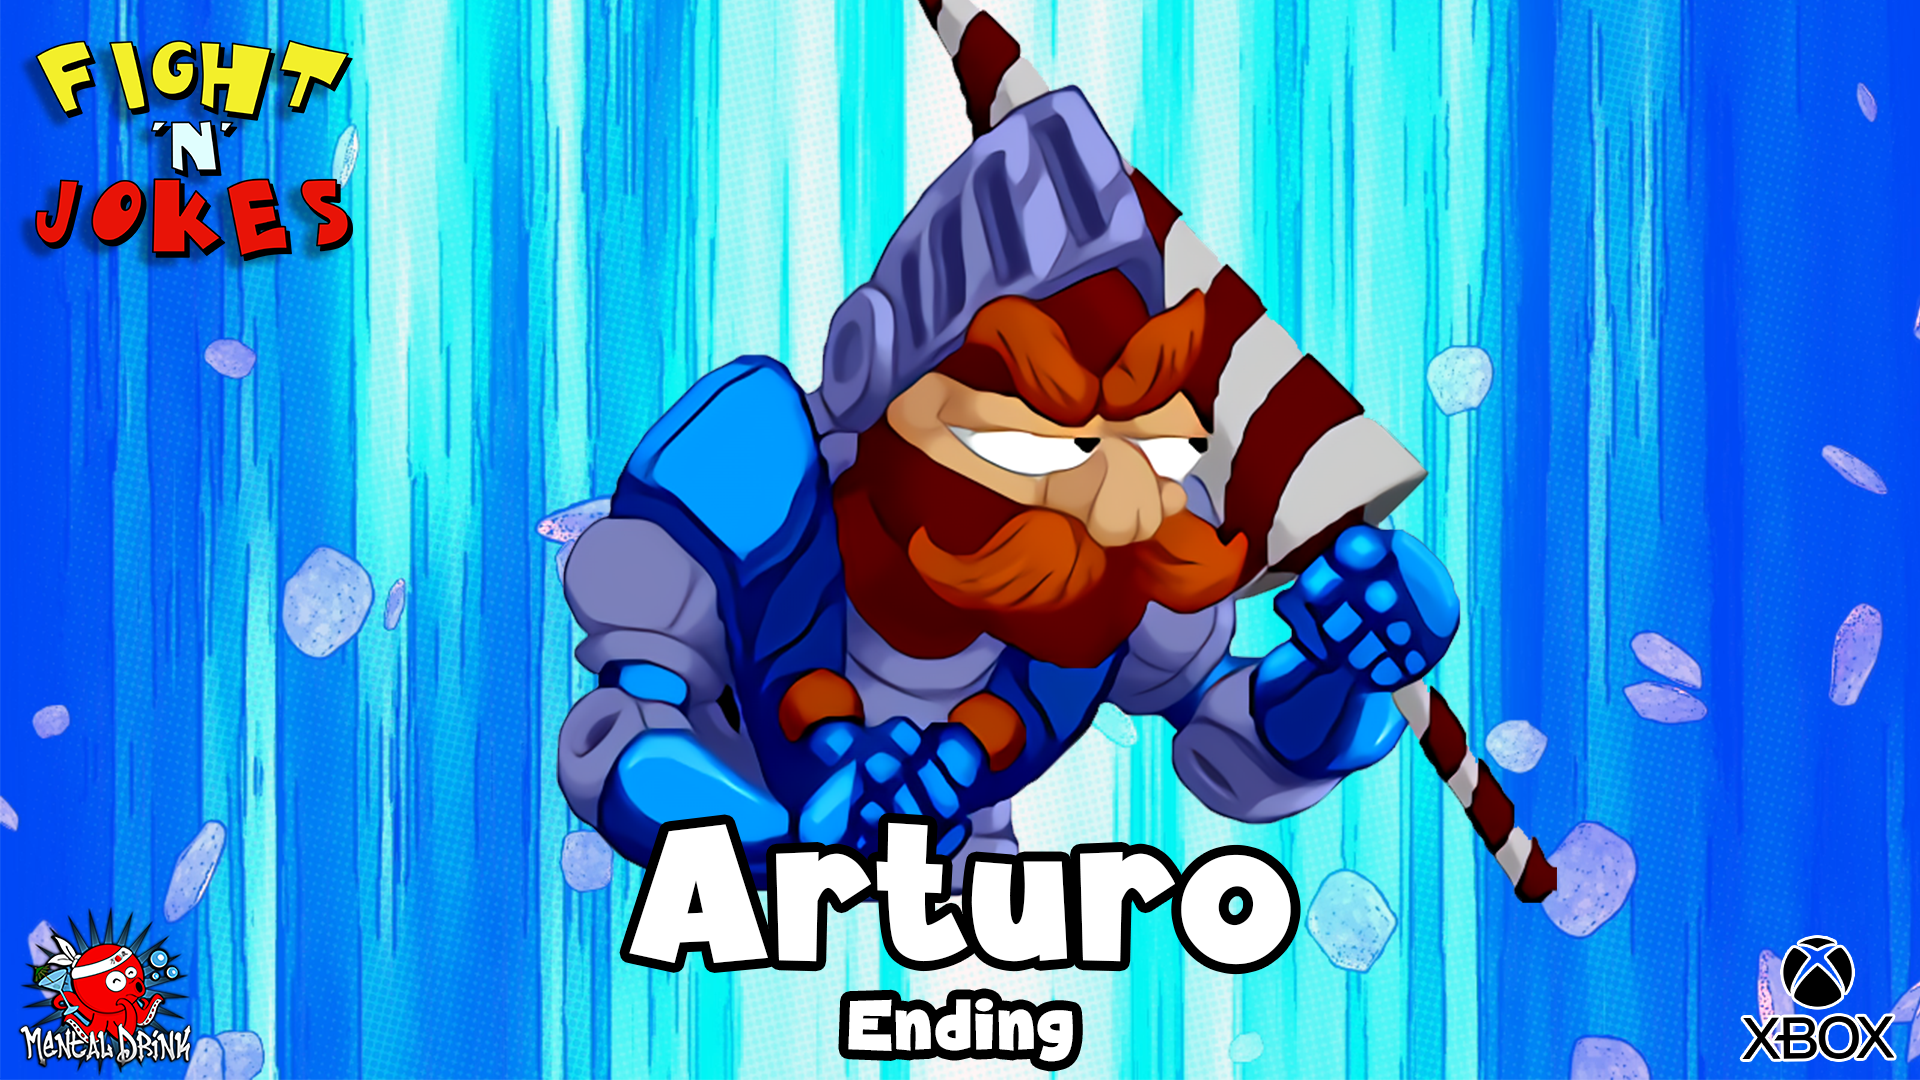 Icon for Ending - Arturo